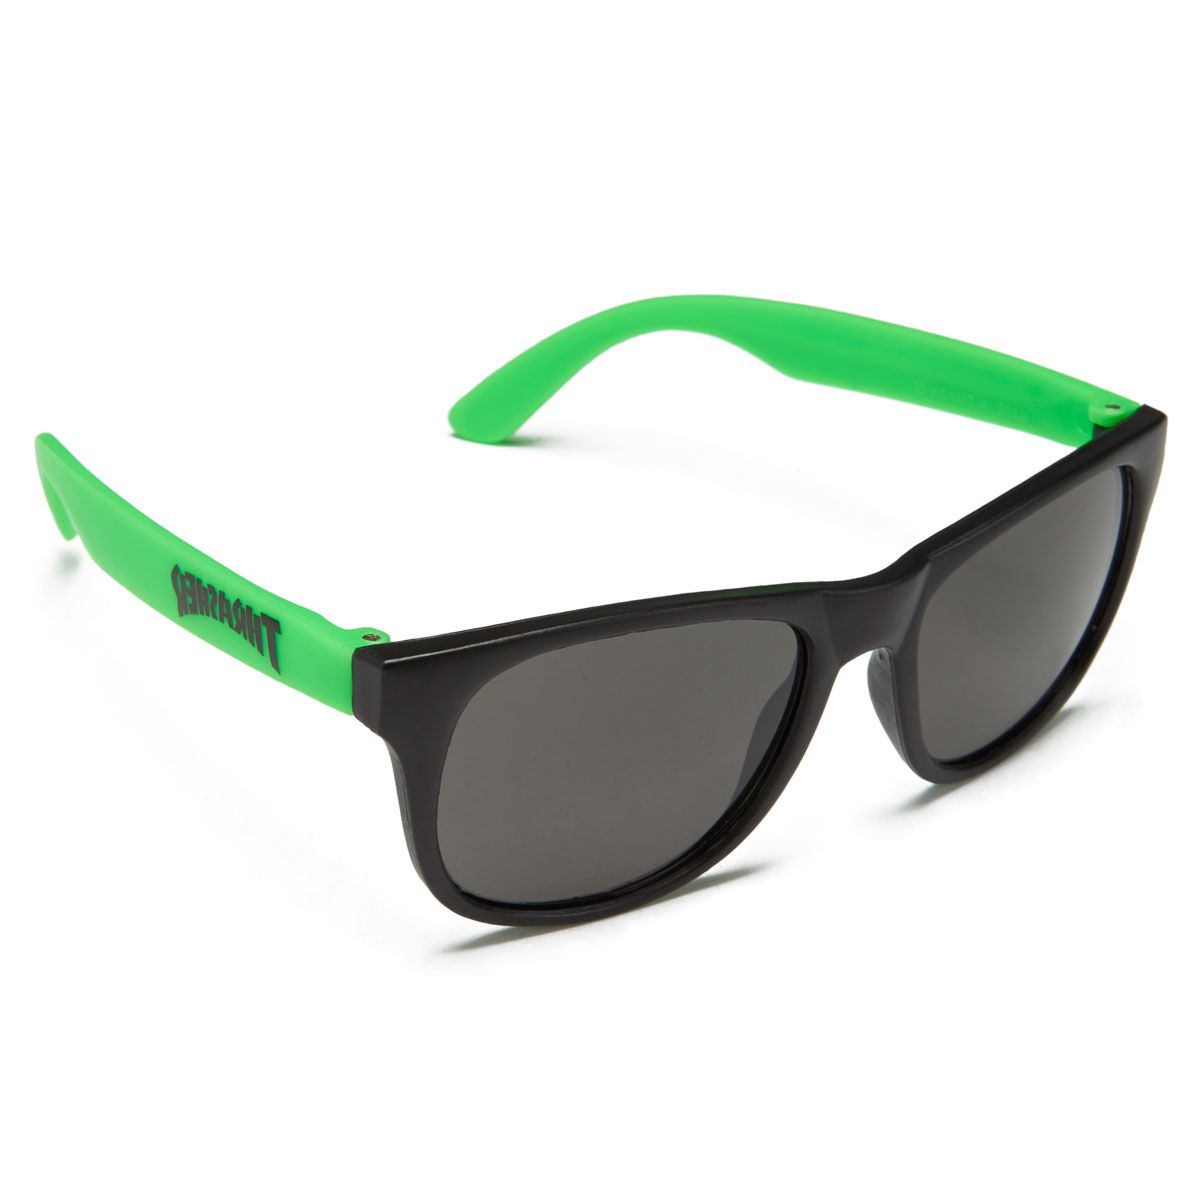 Thrasher Logo Sunglasses - Green image 1